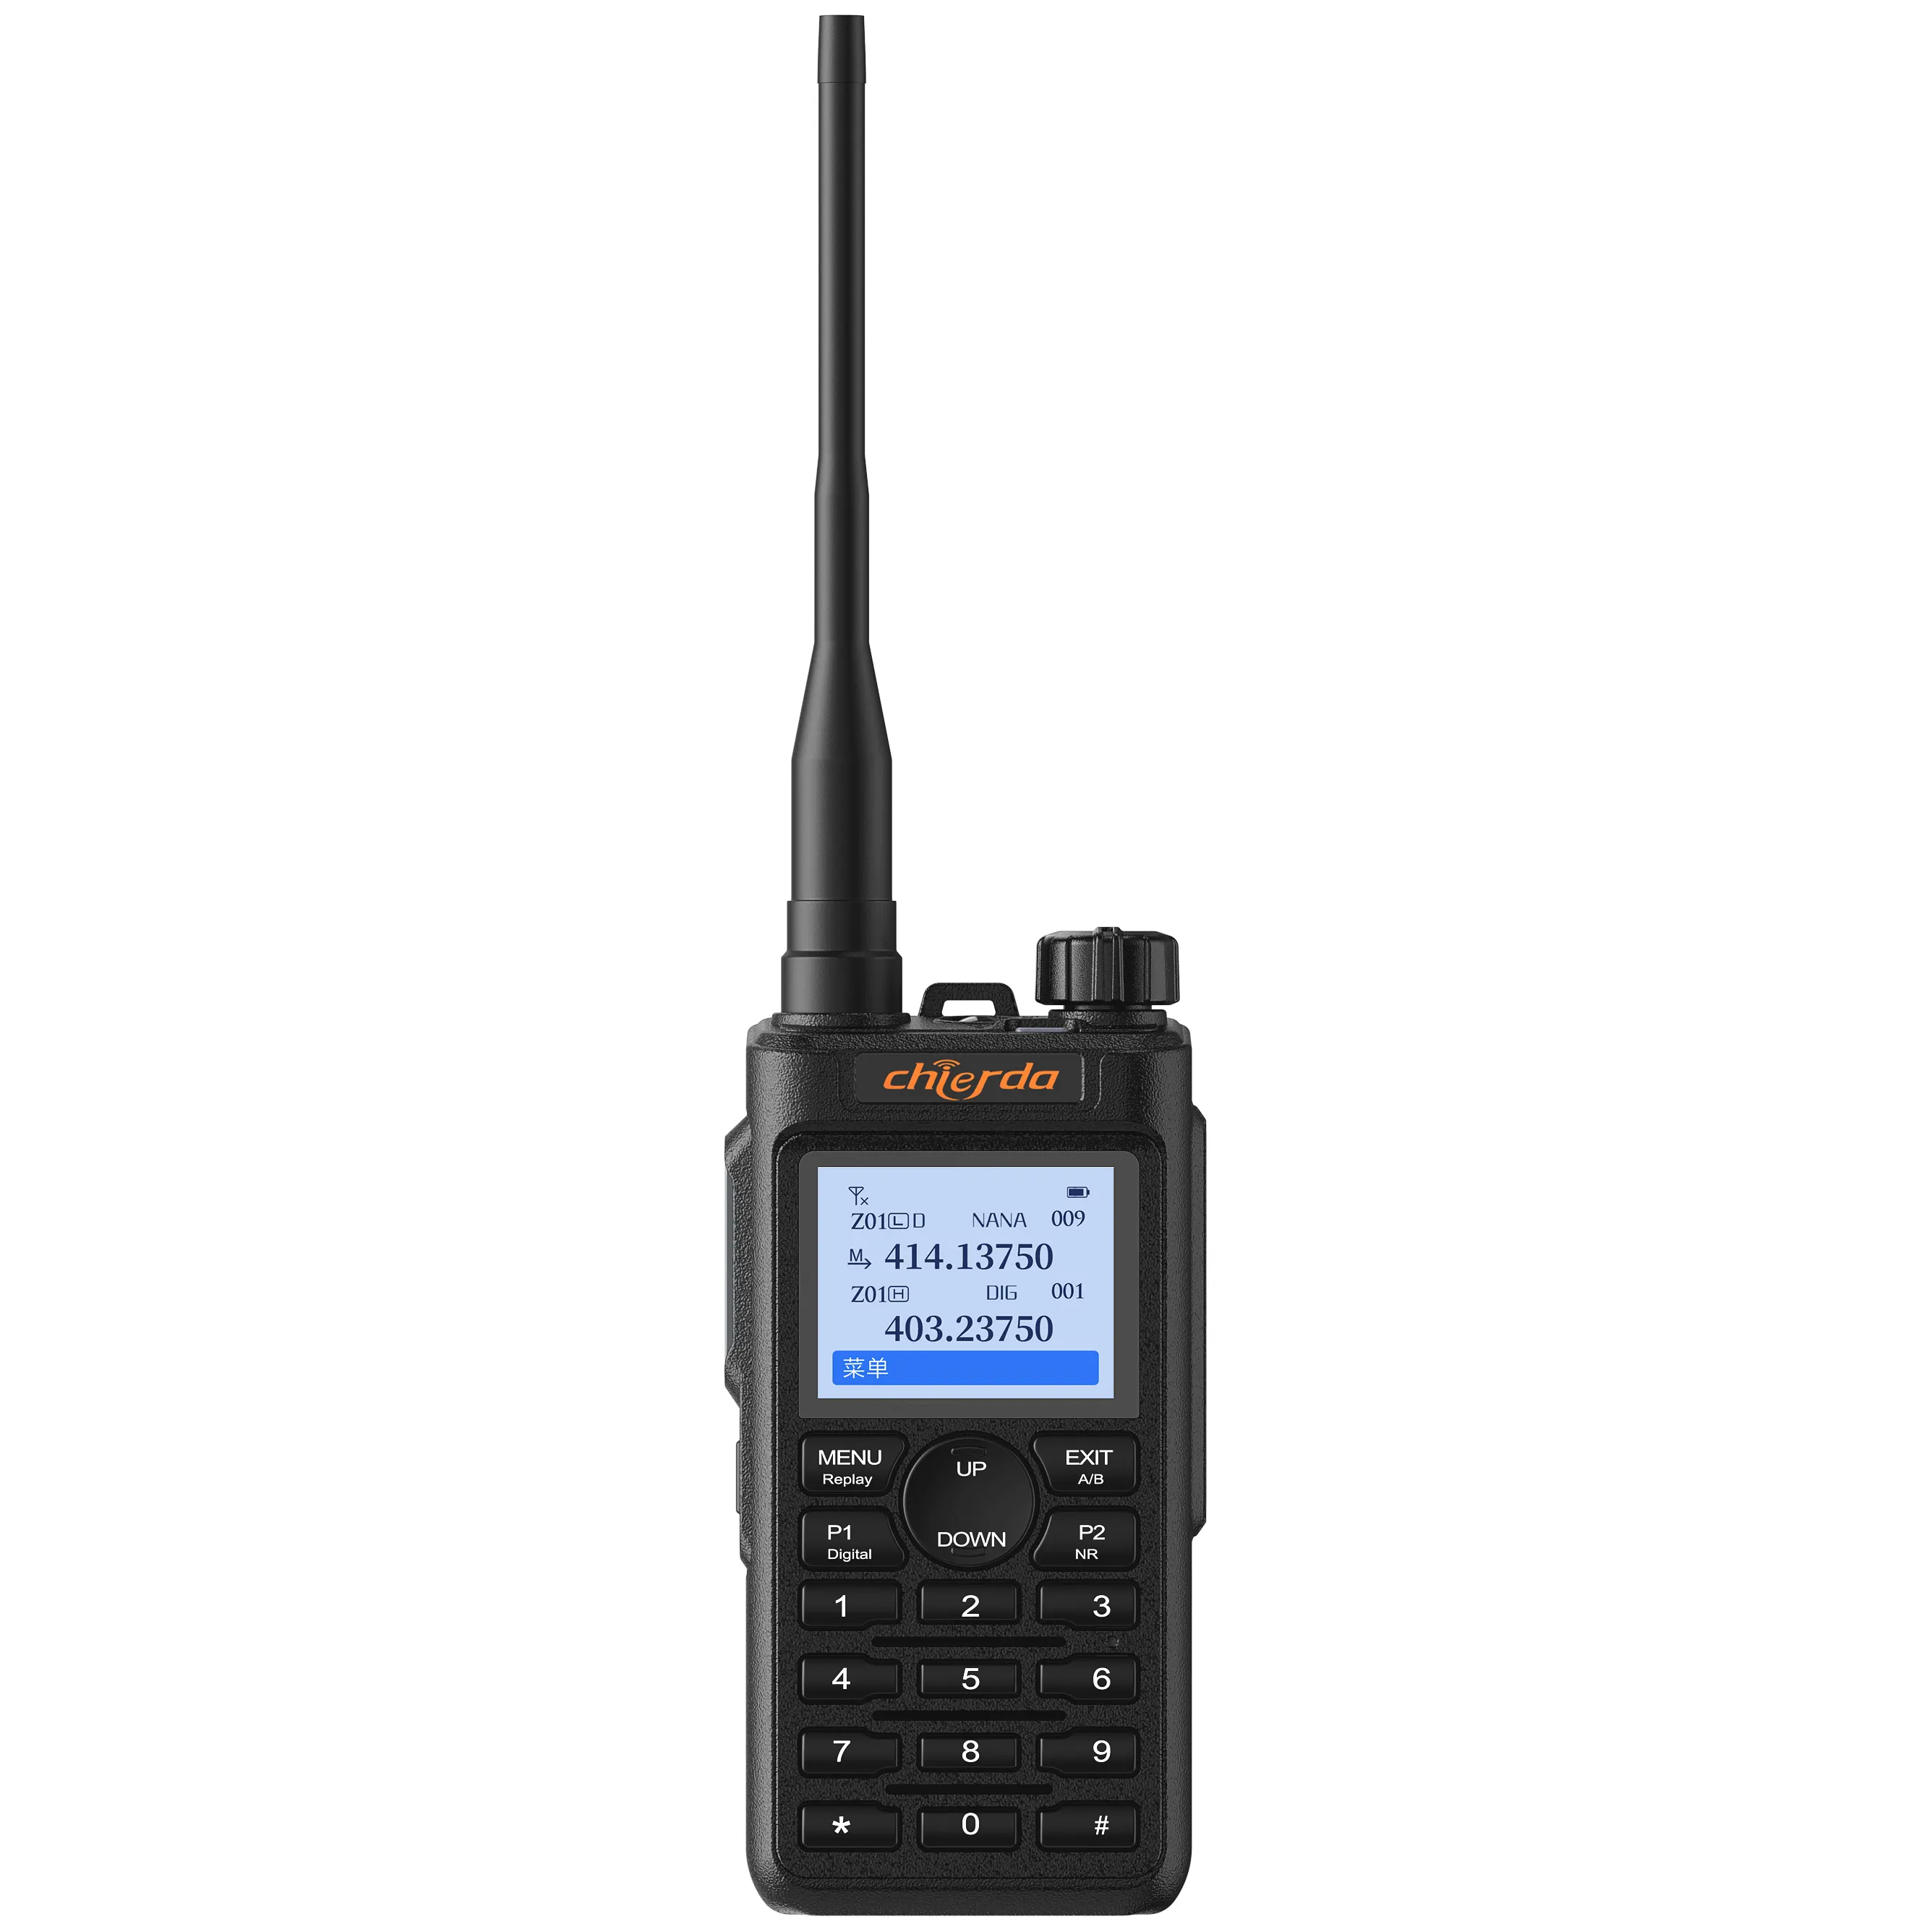 Chierda UV58D DMR Radio amatoriale Dual-Band walkie talkie 5km con crittografia aes256